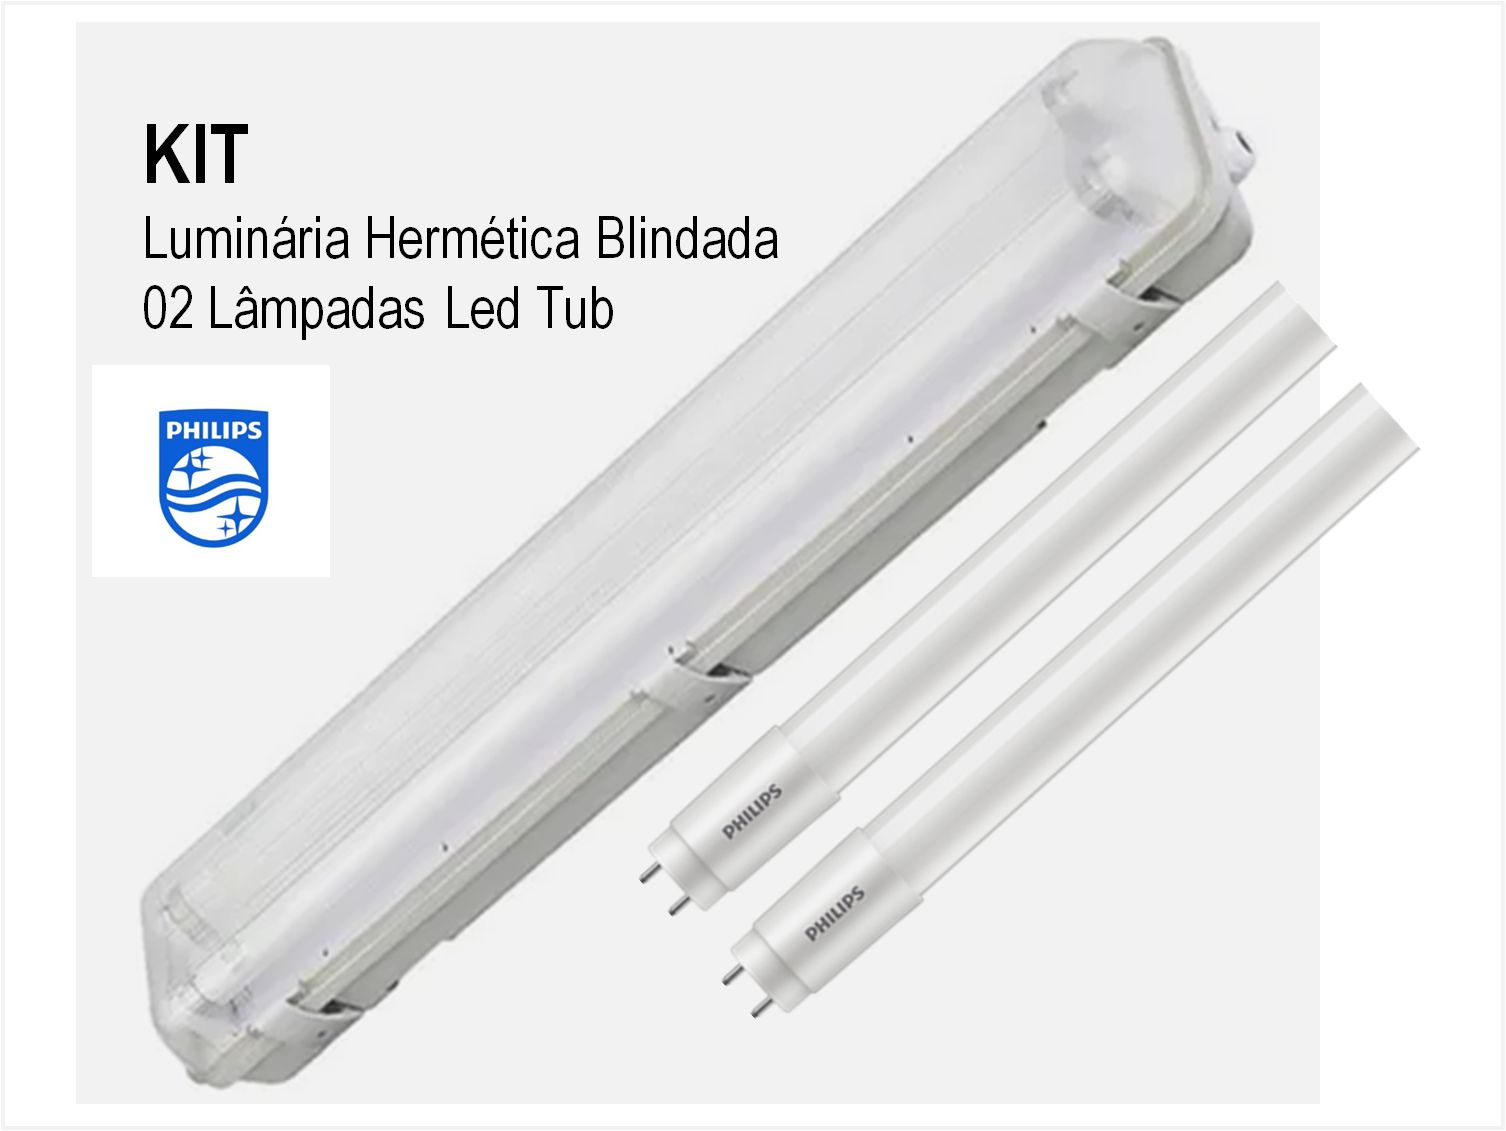 Kit Luminária Hermética Blindada + 2 Lâmpadas Tubular Philips - SensoShop -  Iluminação LED, Alarmes, Eletrônicos e Acessórios